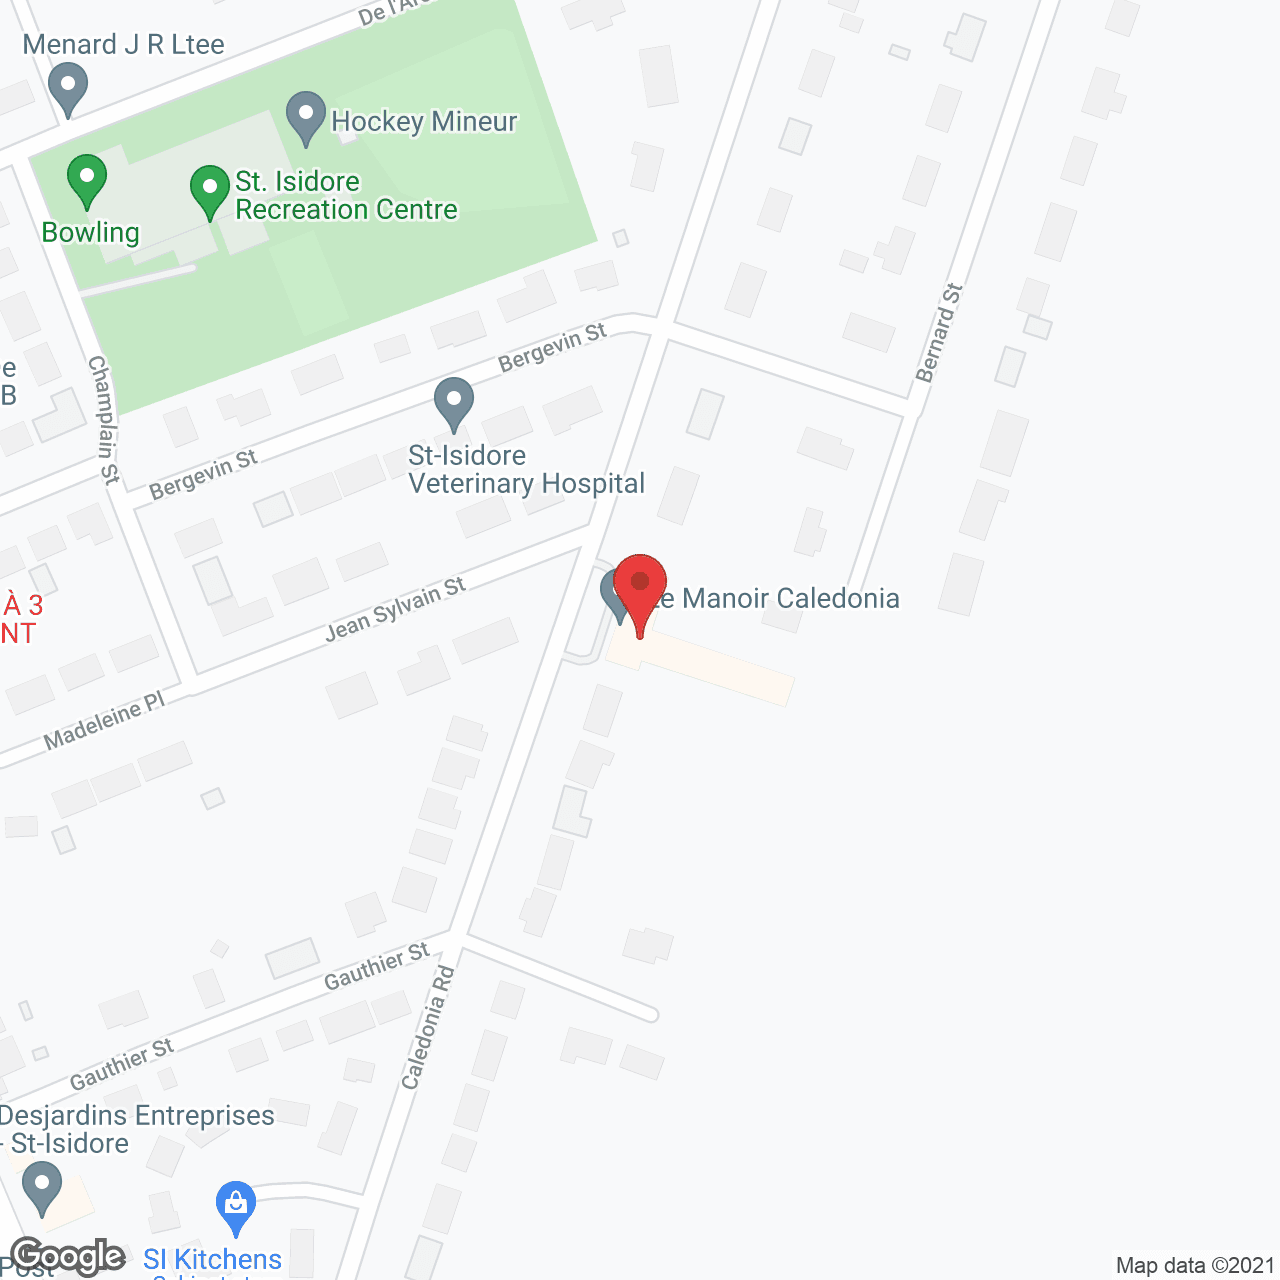 Centre Daccueil Lise Menard in google map